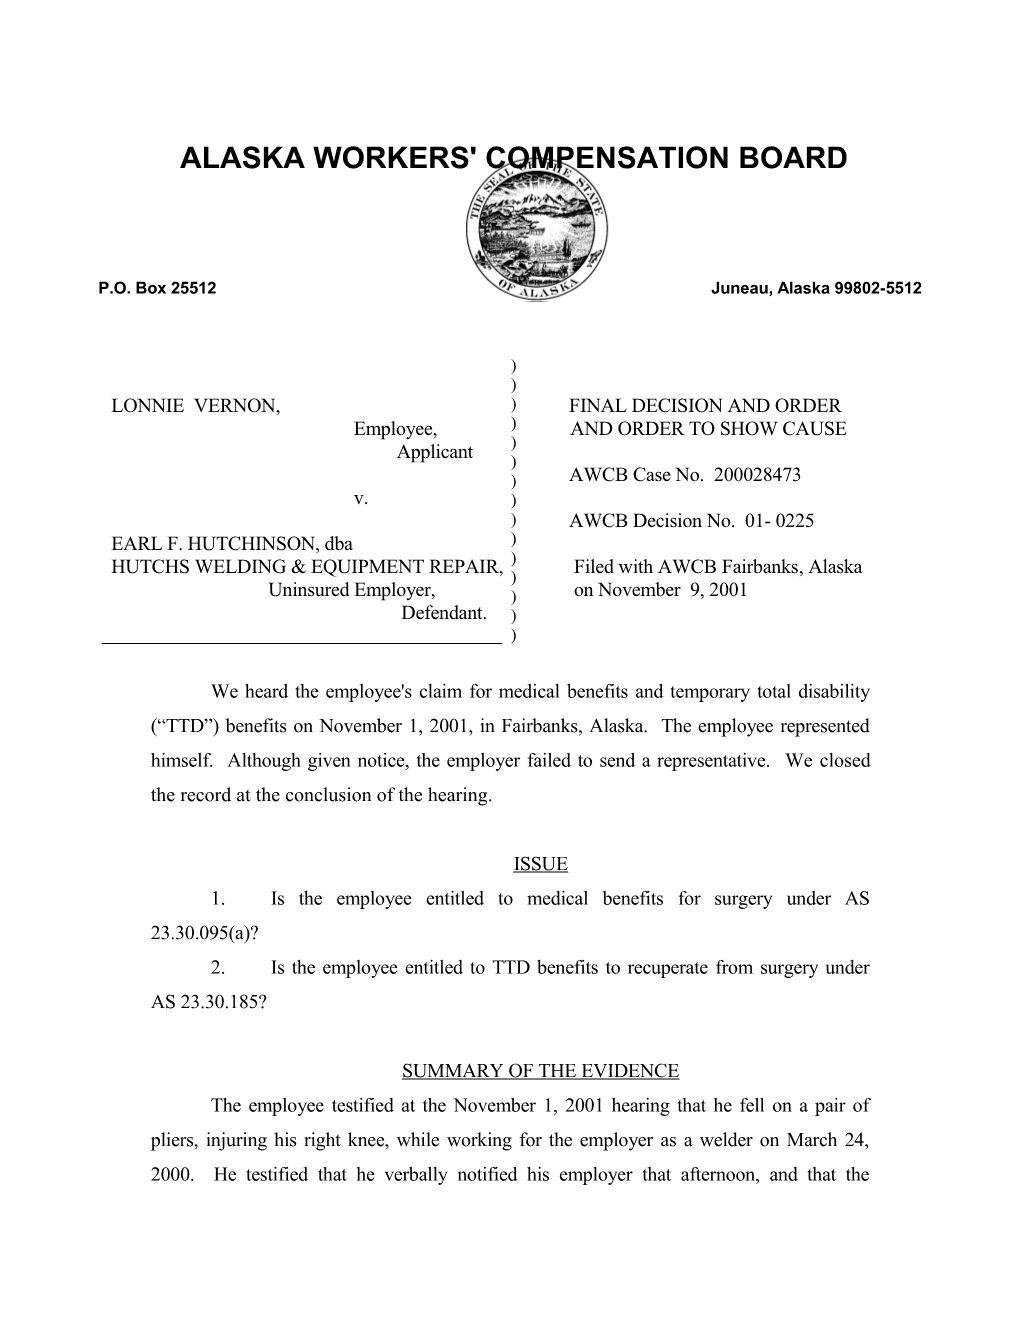 Alaska Workers' Compensation Board s47